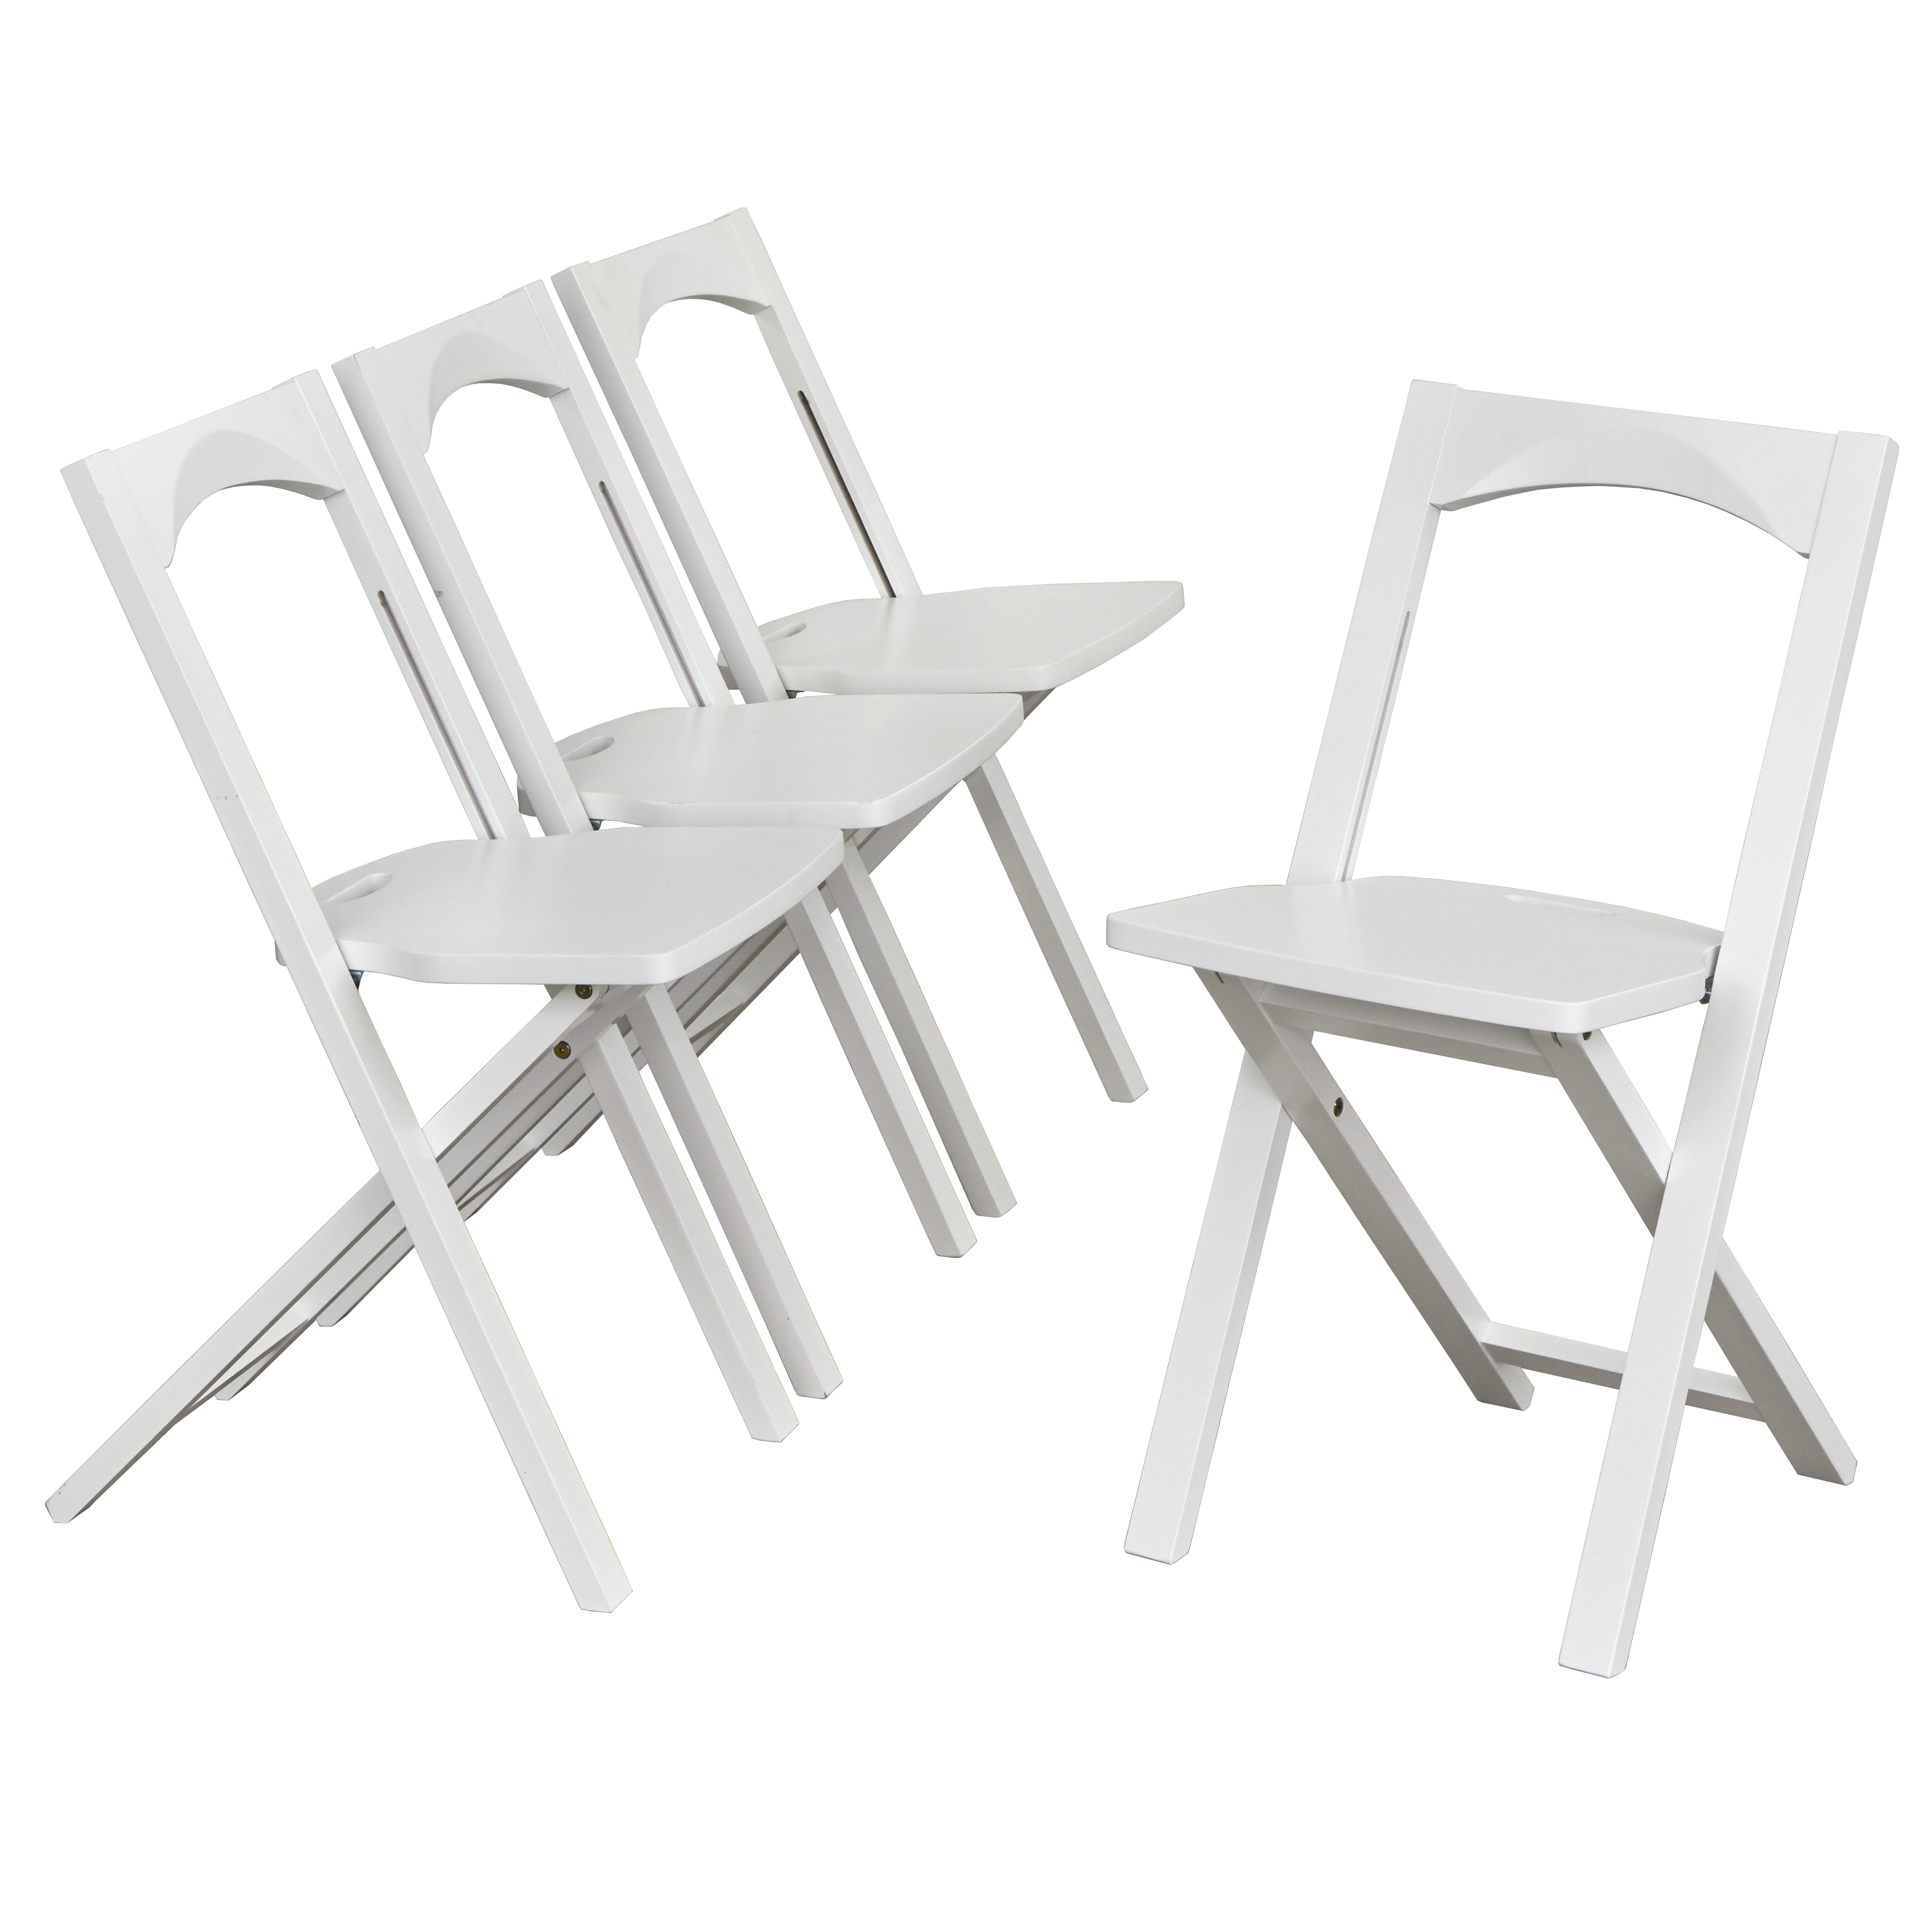 TMS Bonus Folding Chairs- Set of 4, White - image 5 of 5